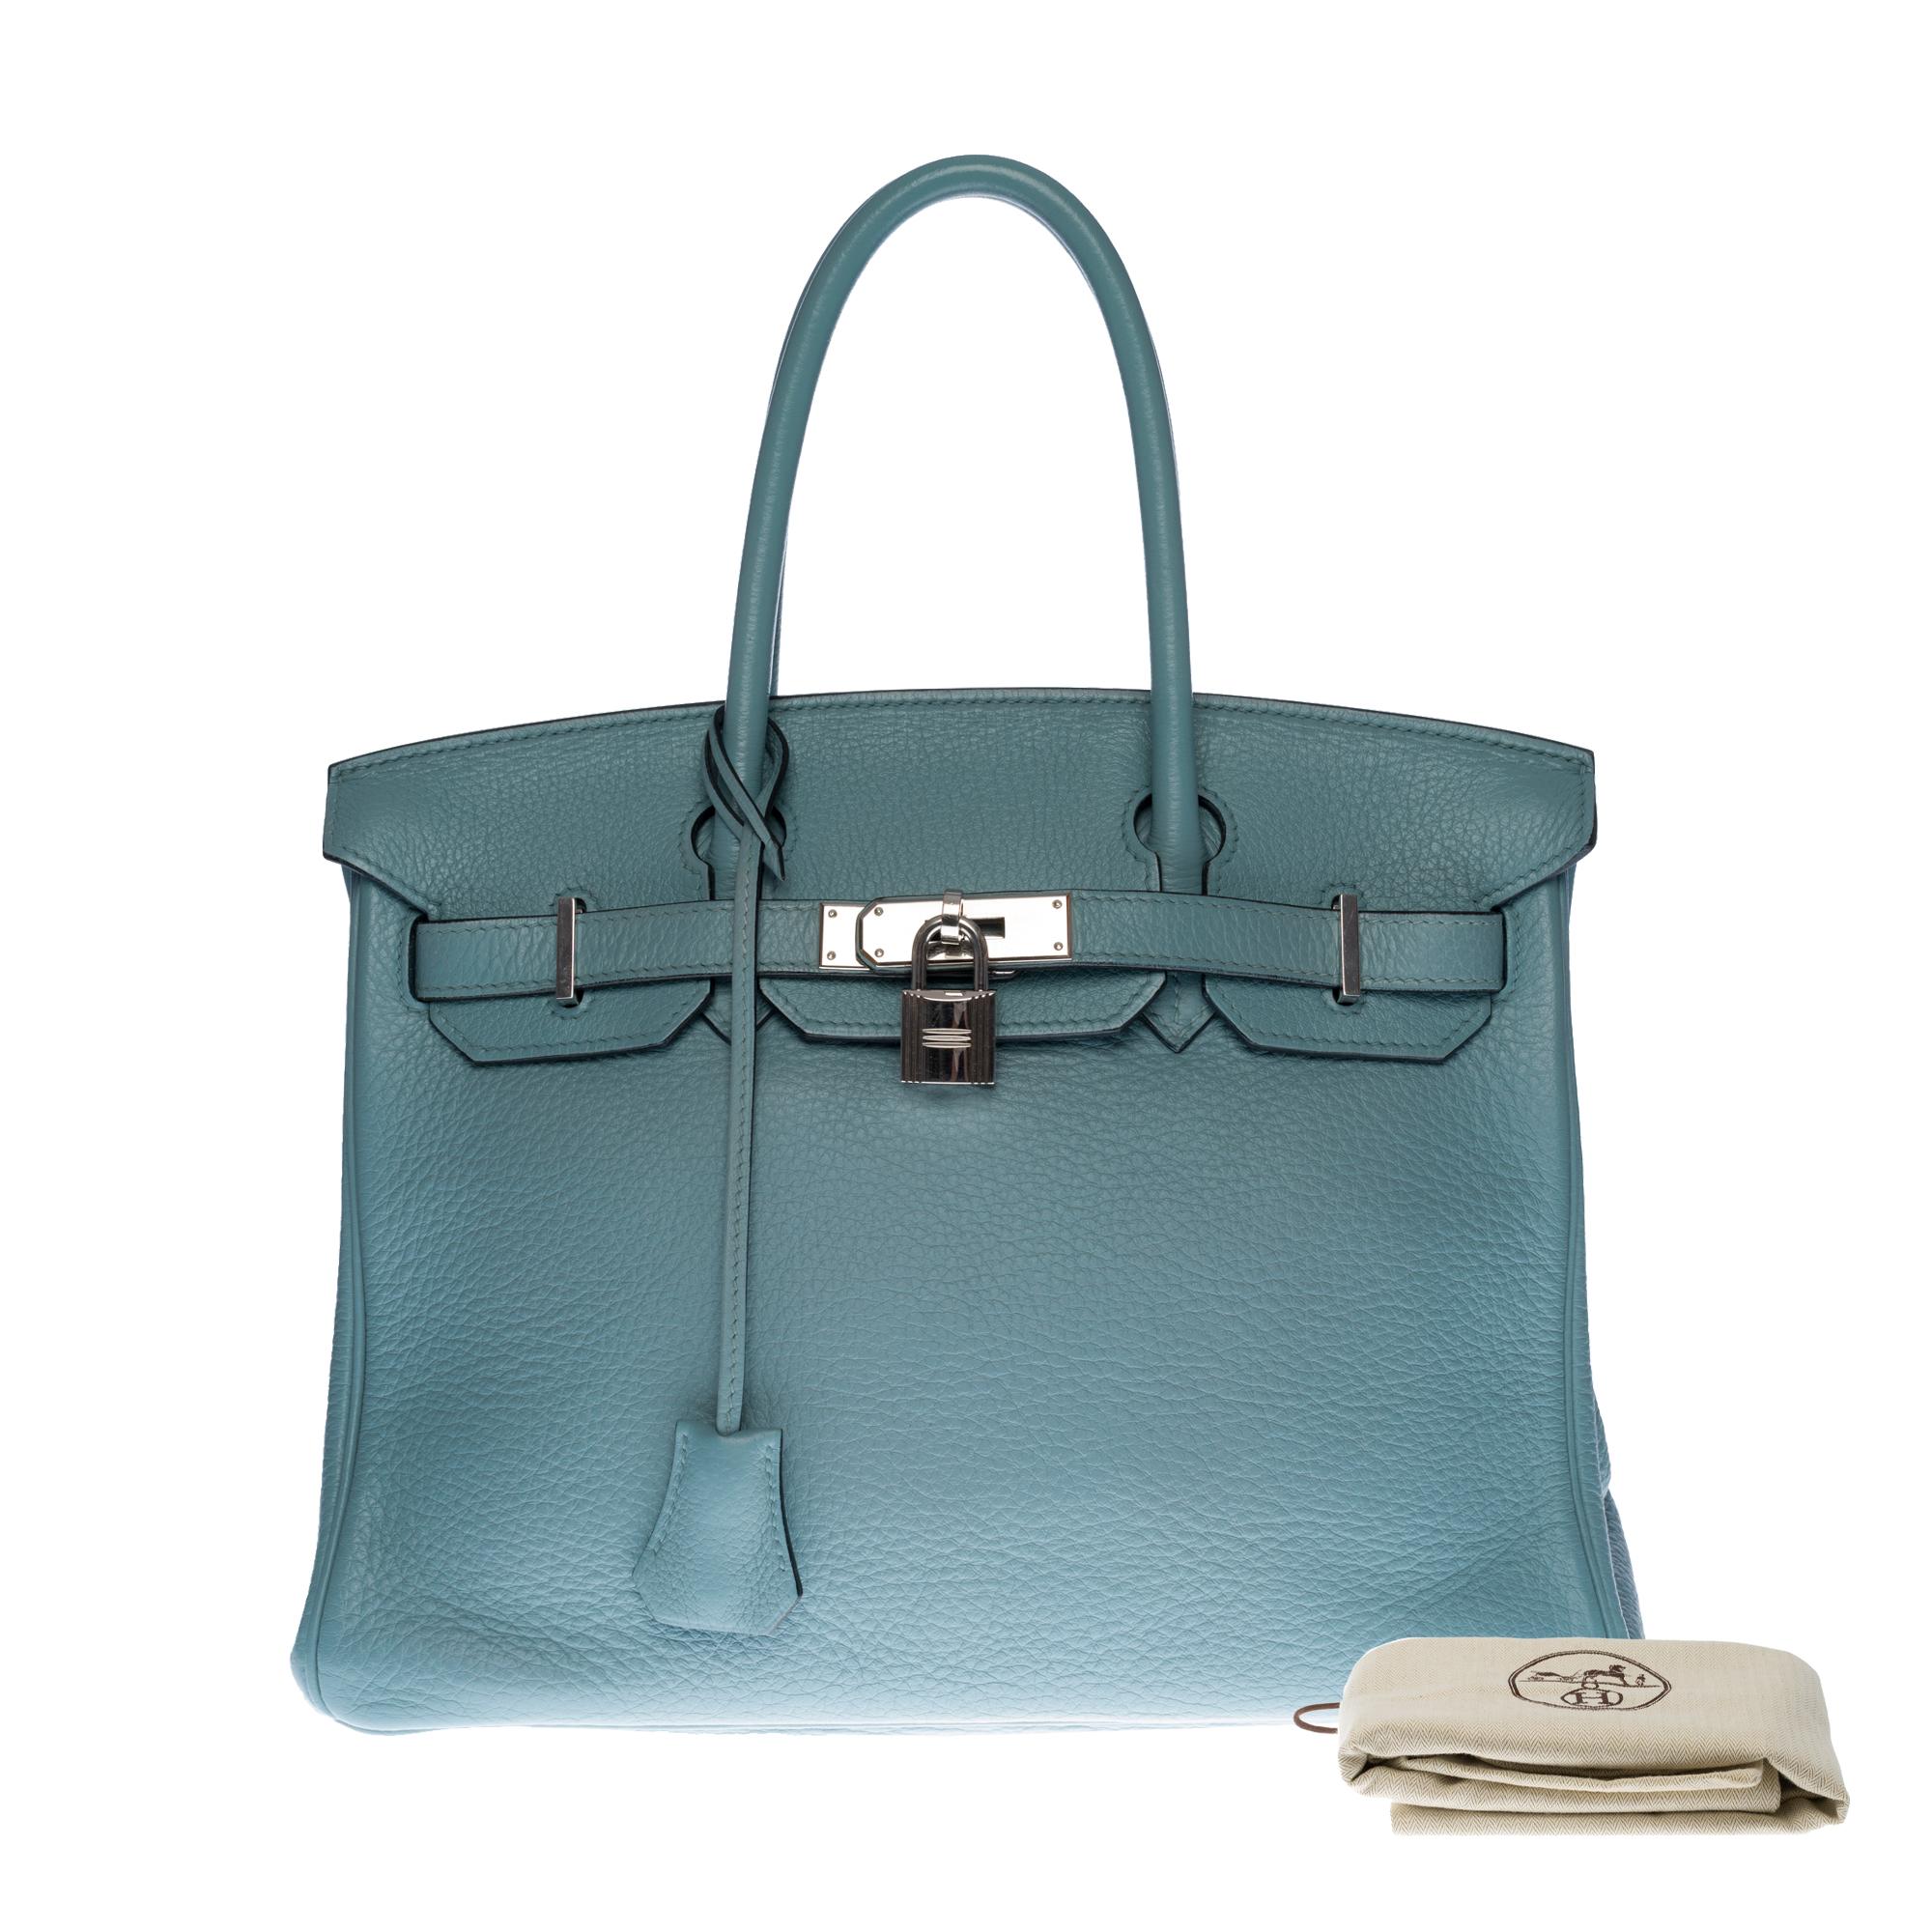 Stunning Hermès Birkin 30 handbag in Bleu ciel Togo leather, SHW 5